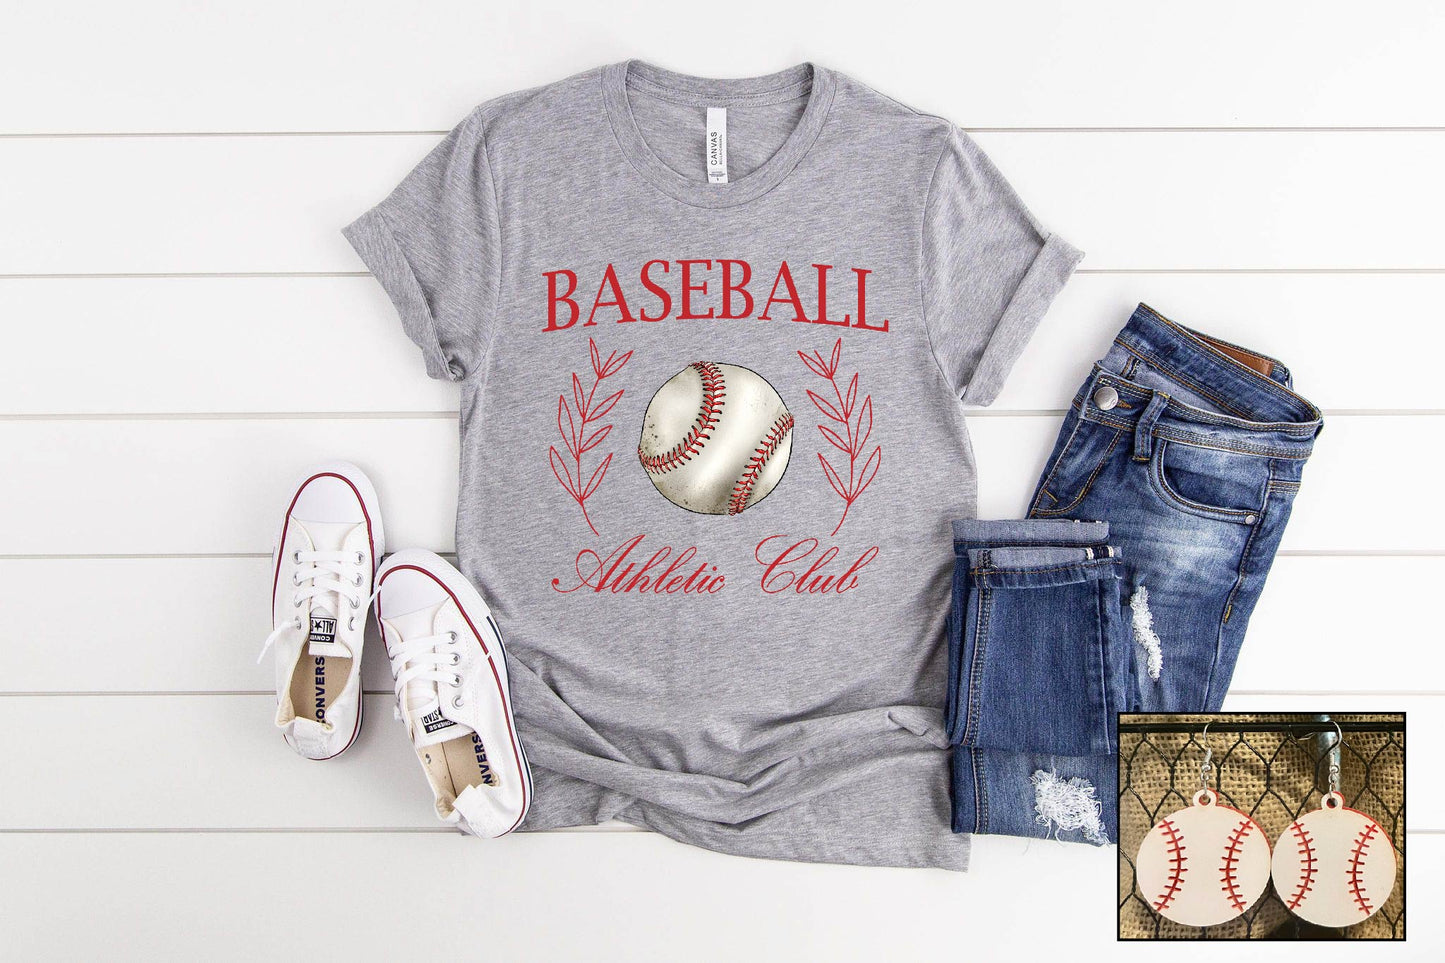 Baseball Athletic Club